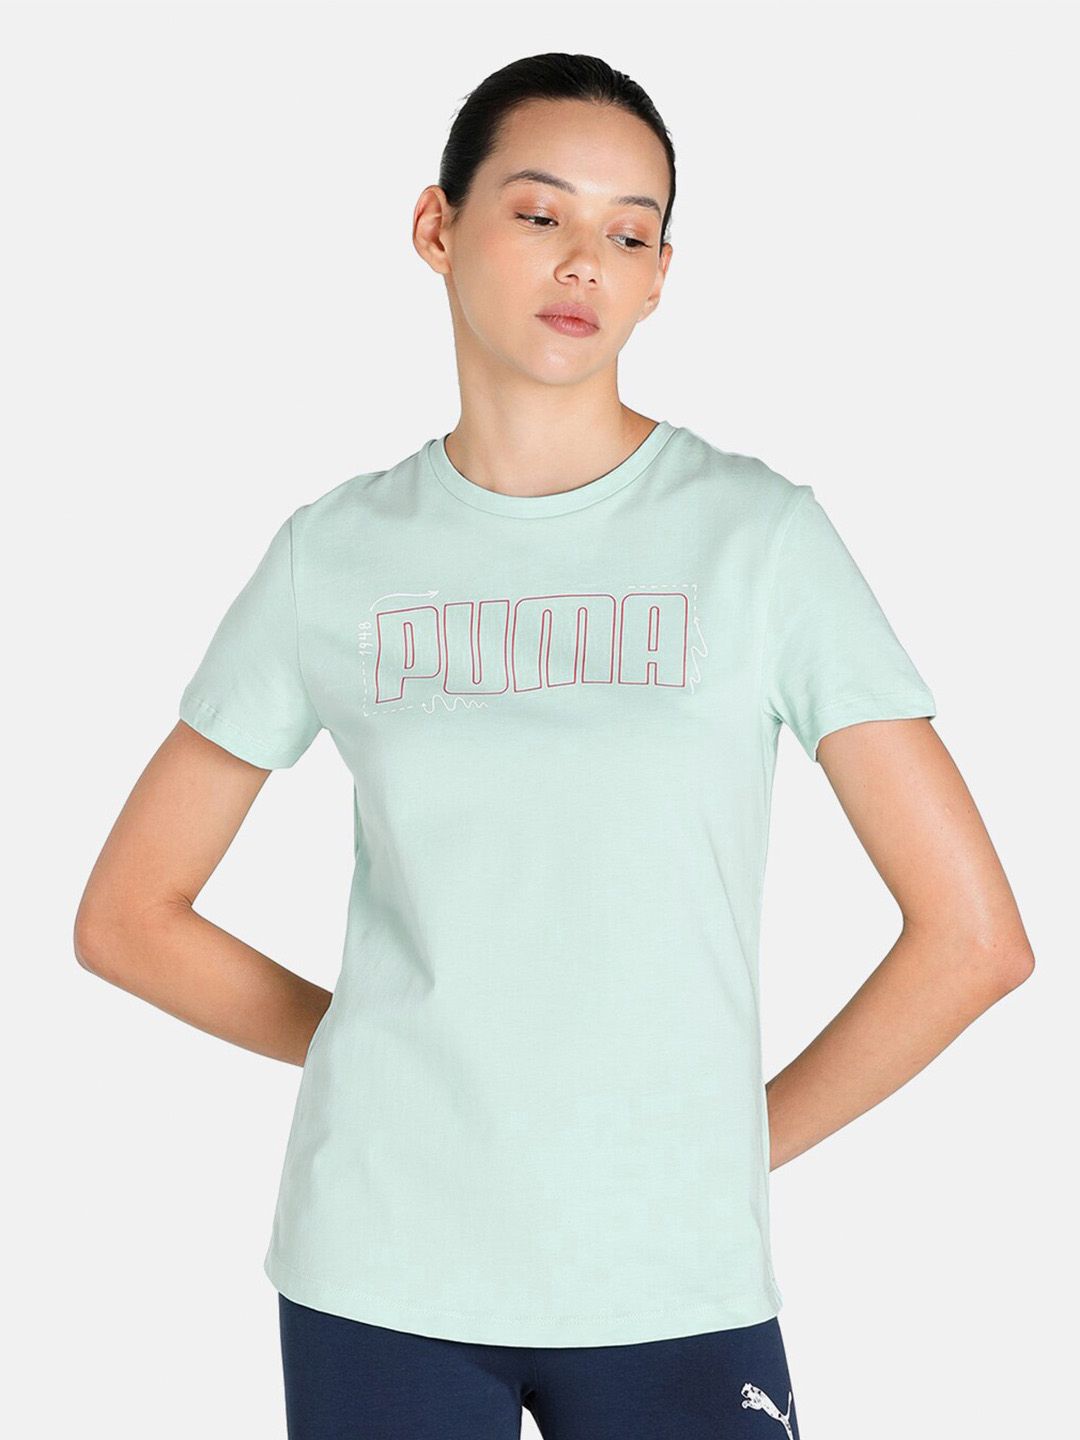 Puma Women Blue Brand Logo Printed T-shirt Price in India